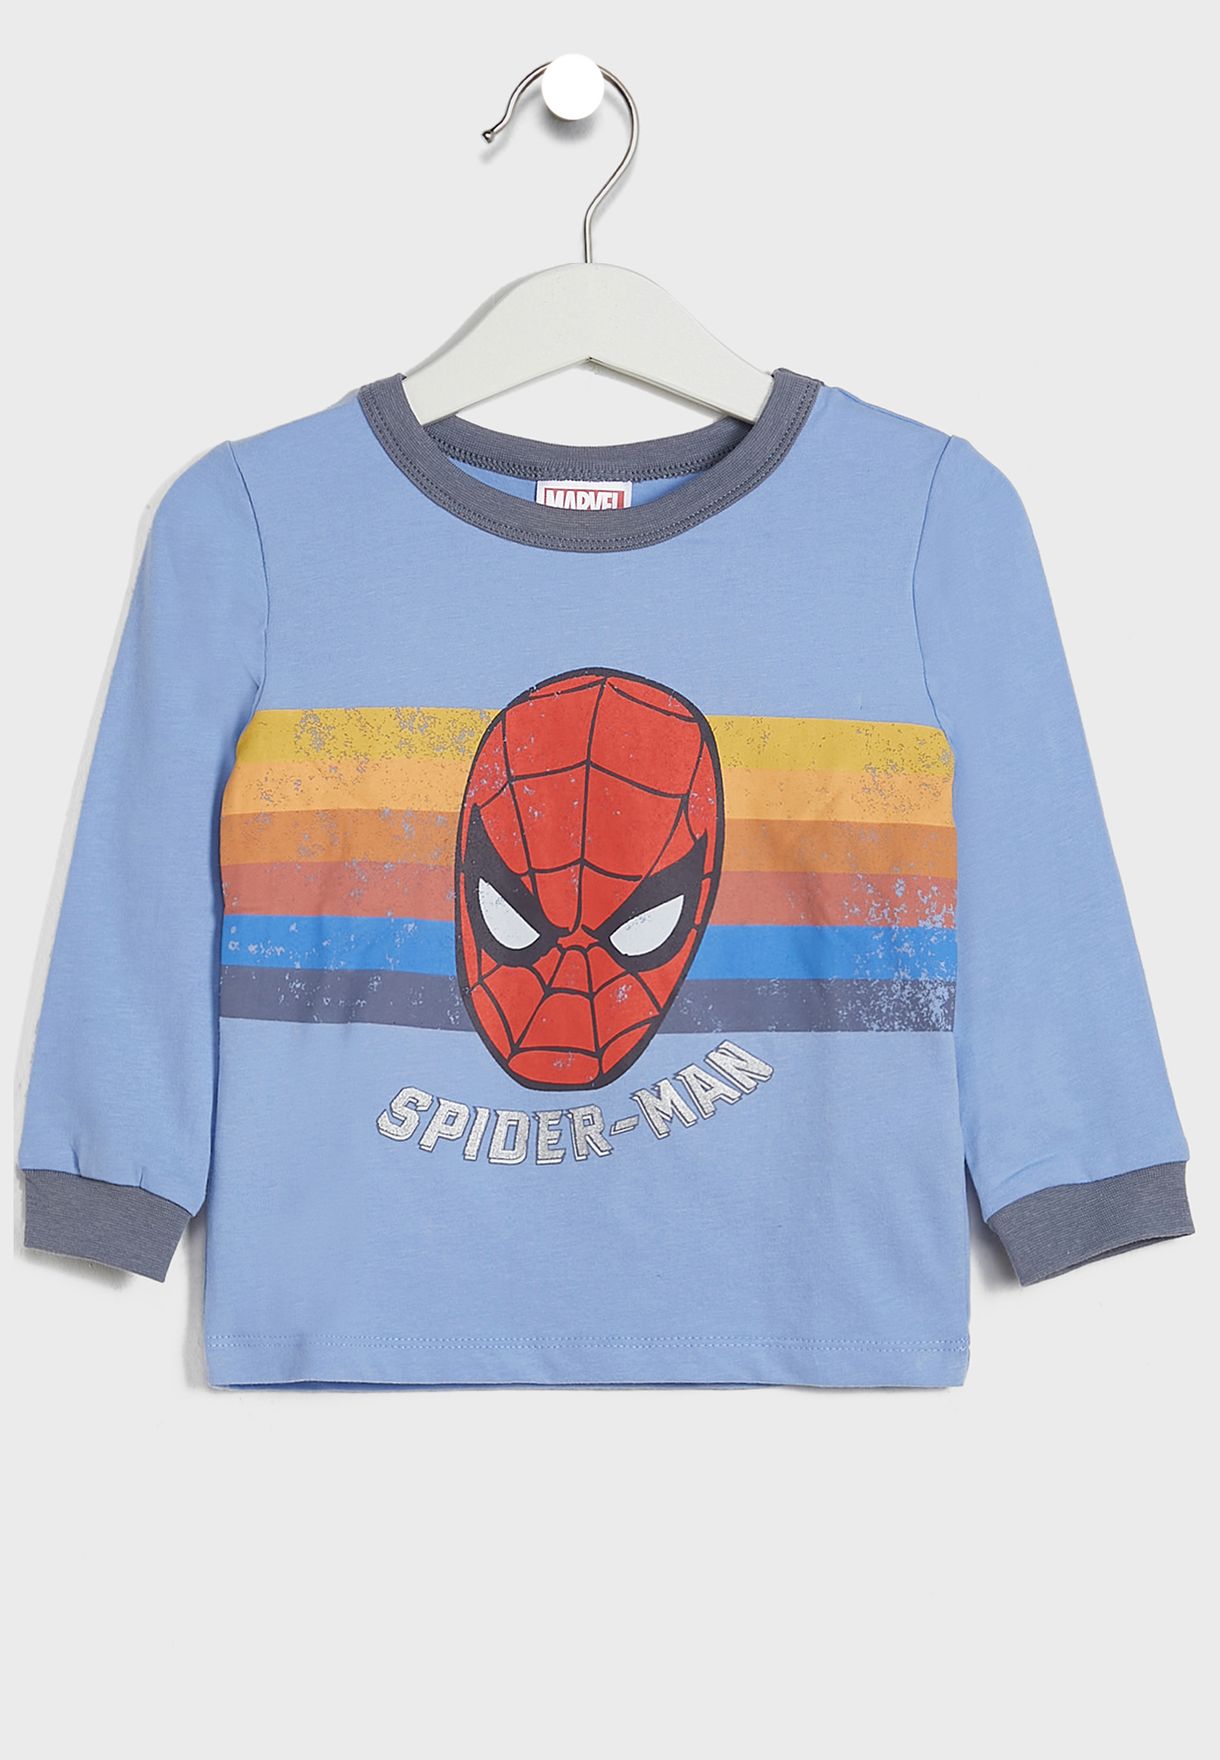 Kids Spider-Man Pyjama Set